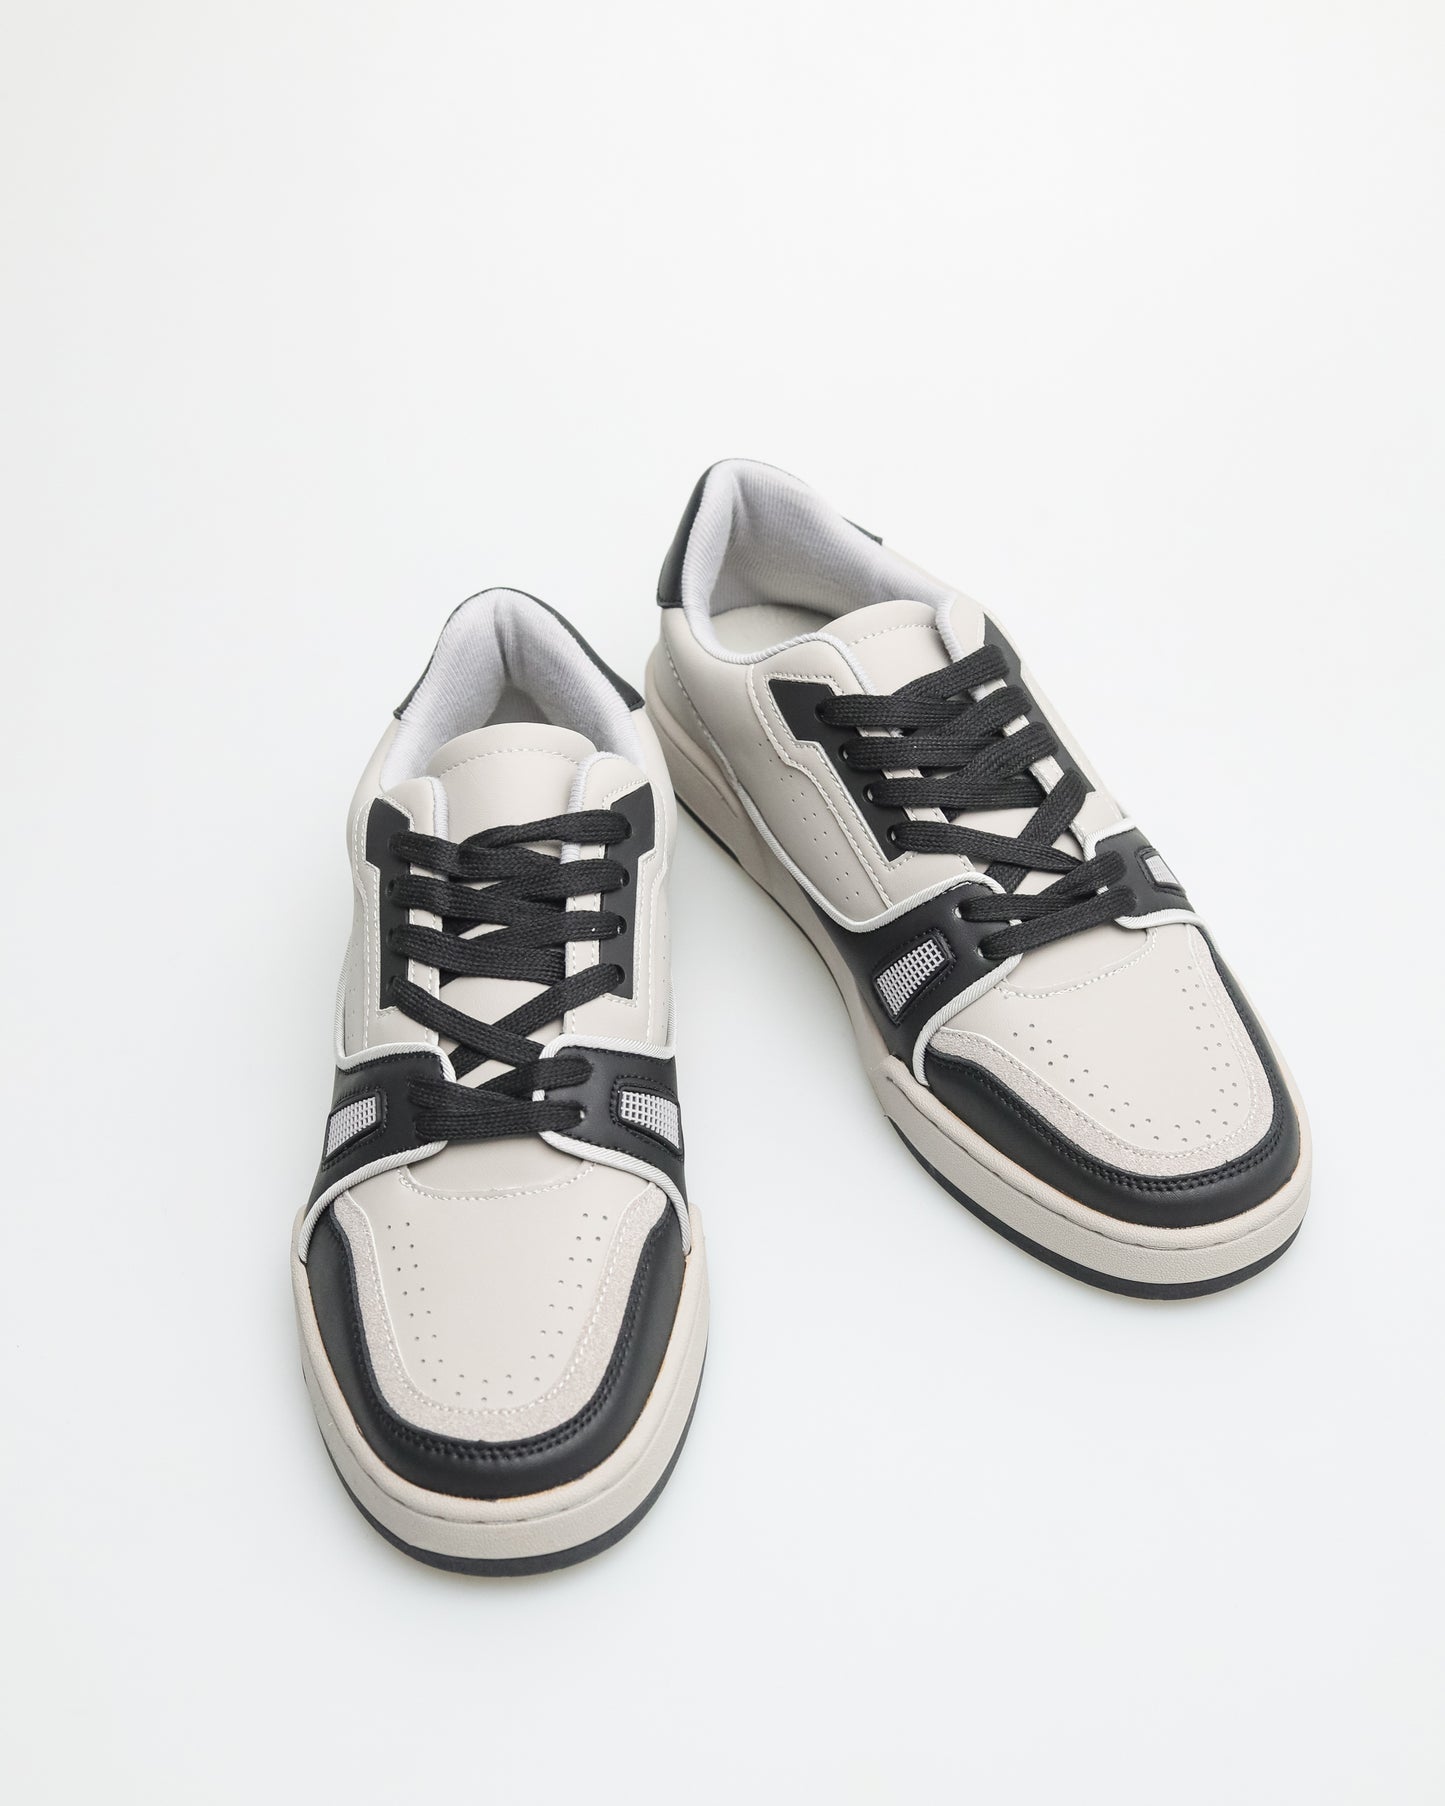 Tomaz C611 Men's Sneakers (Grey/Black) – TOMAZ